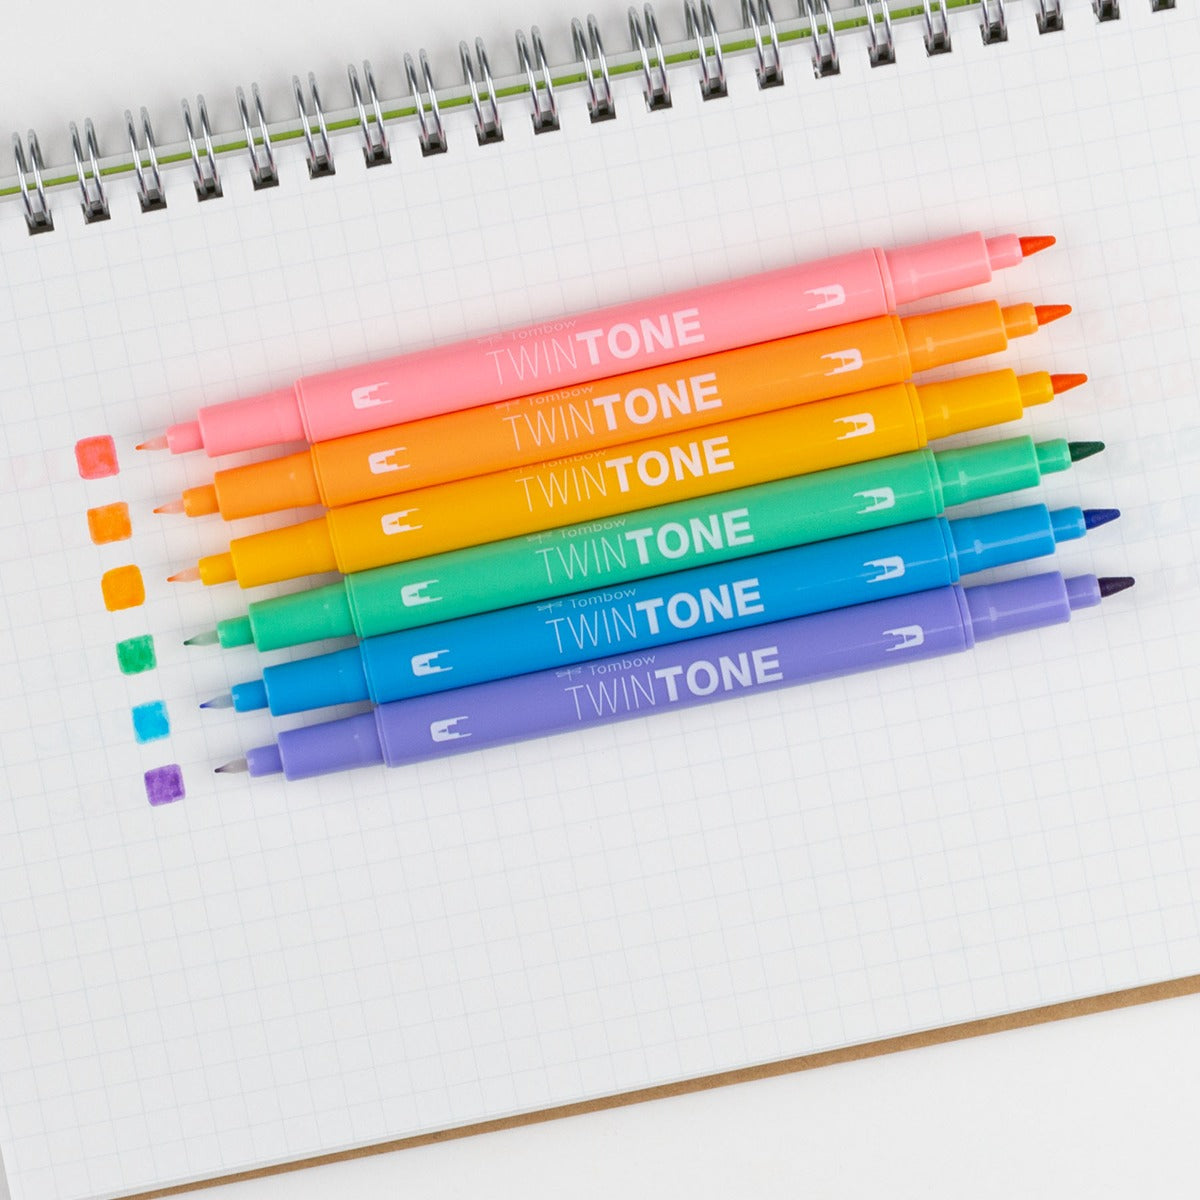 Tombow Fudenosuke Pastel Brush Pen Set of 6